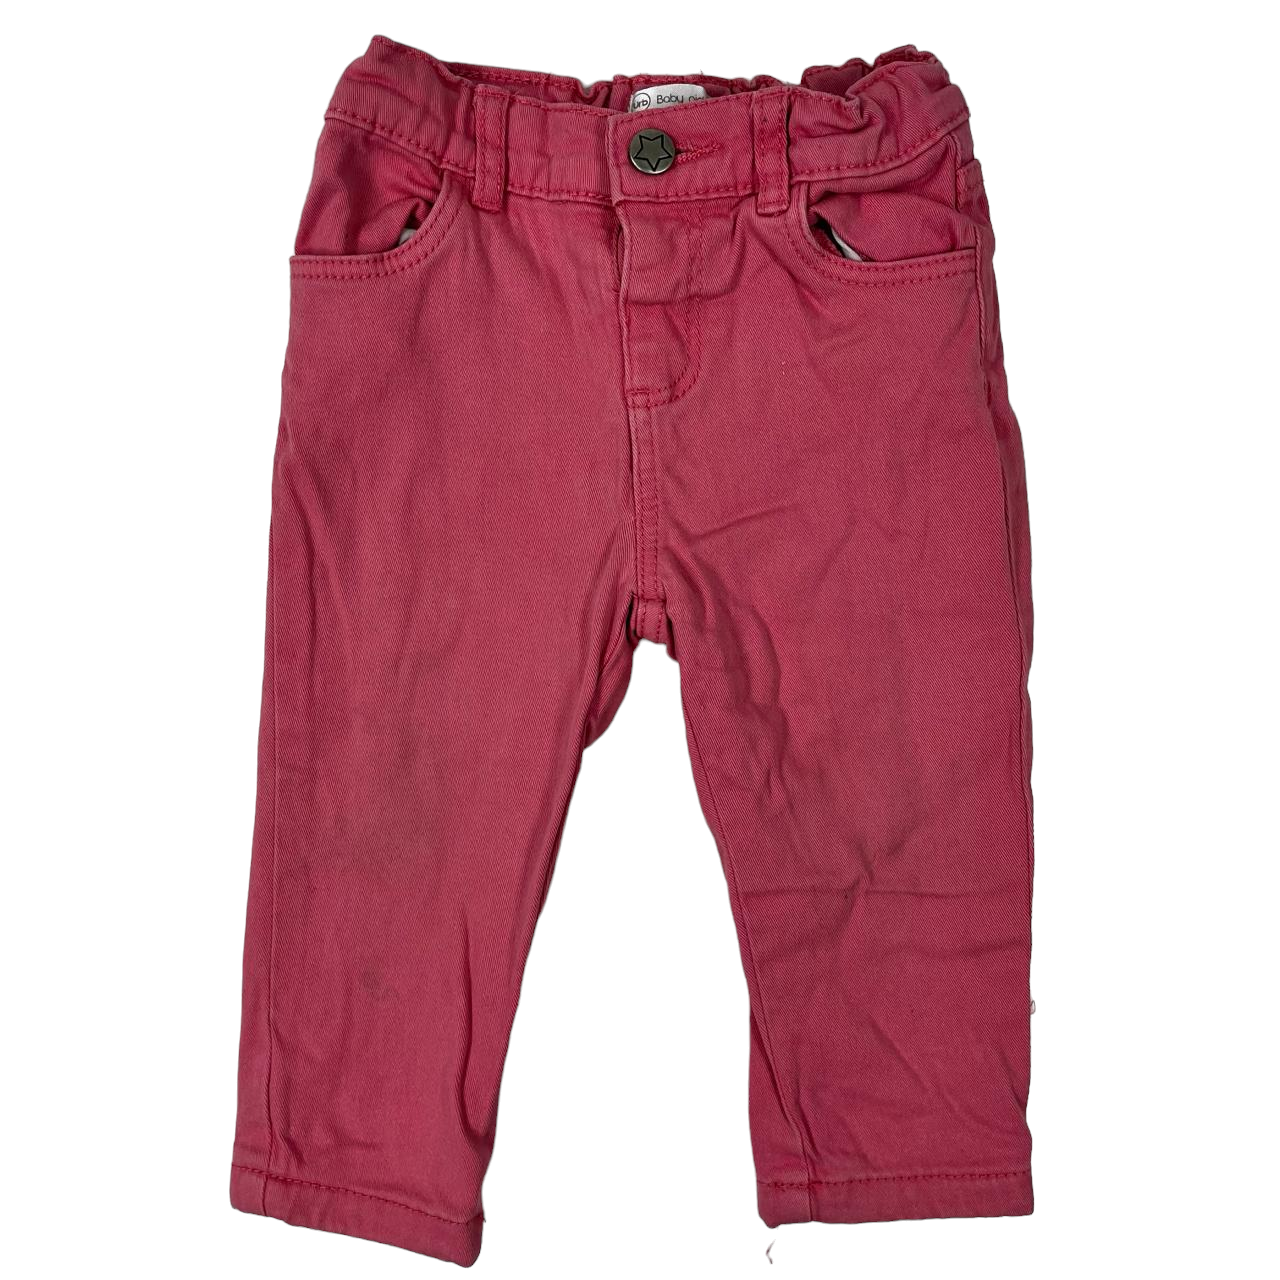 Pantalon forrado rosado con bolsillos y pretina ajustable